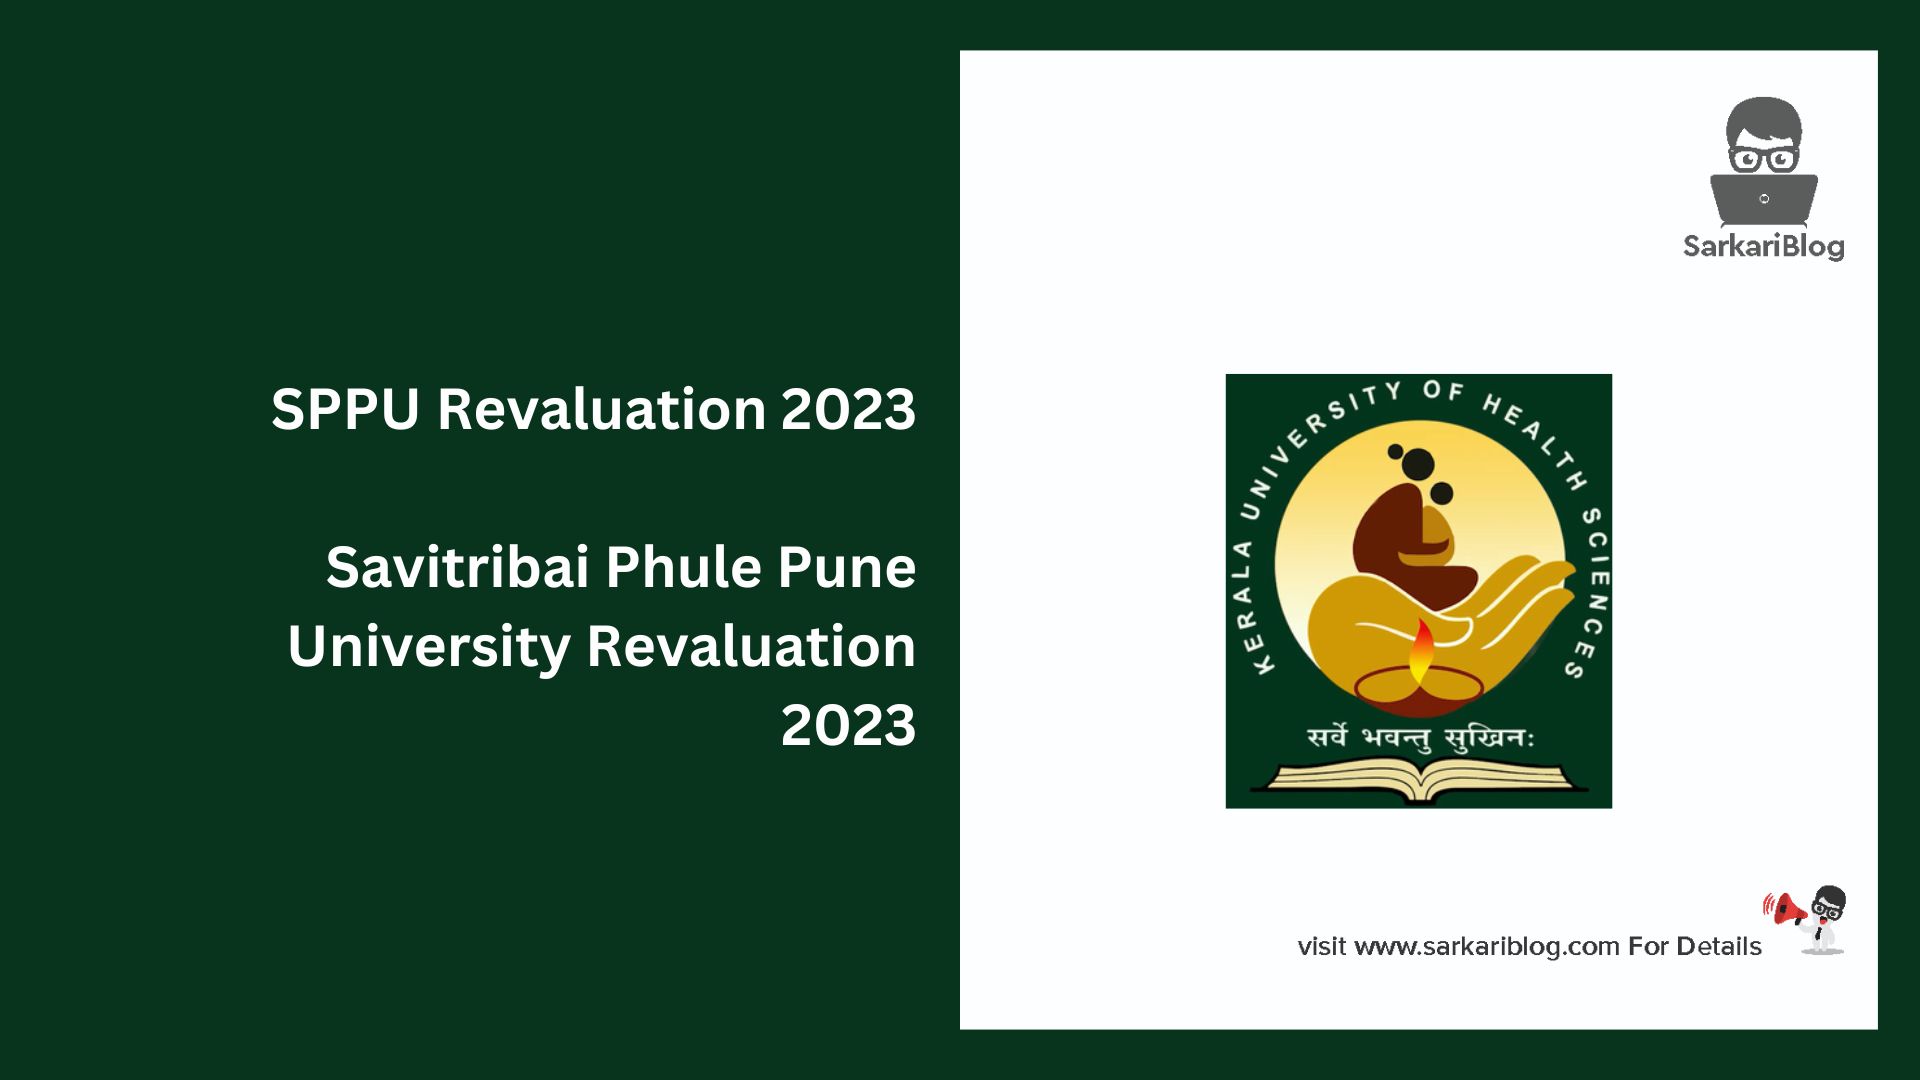 SPPU Revaluation 2023